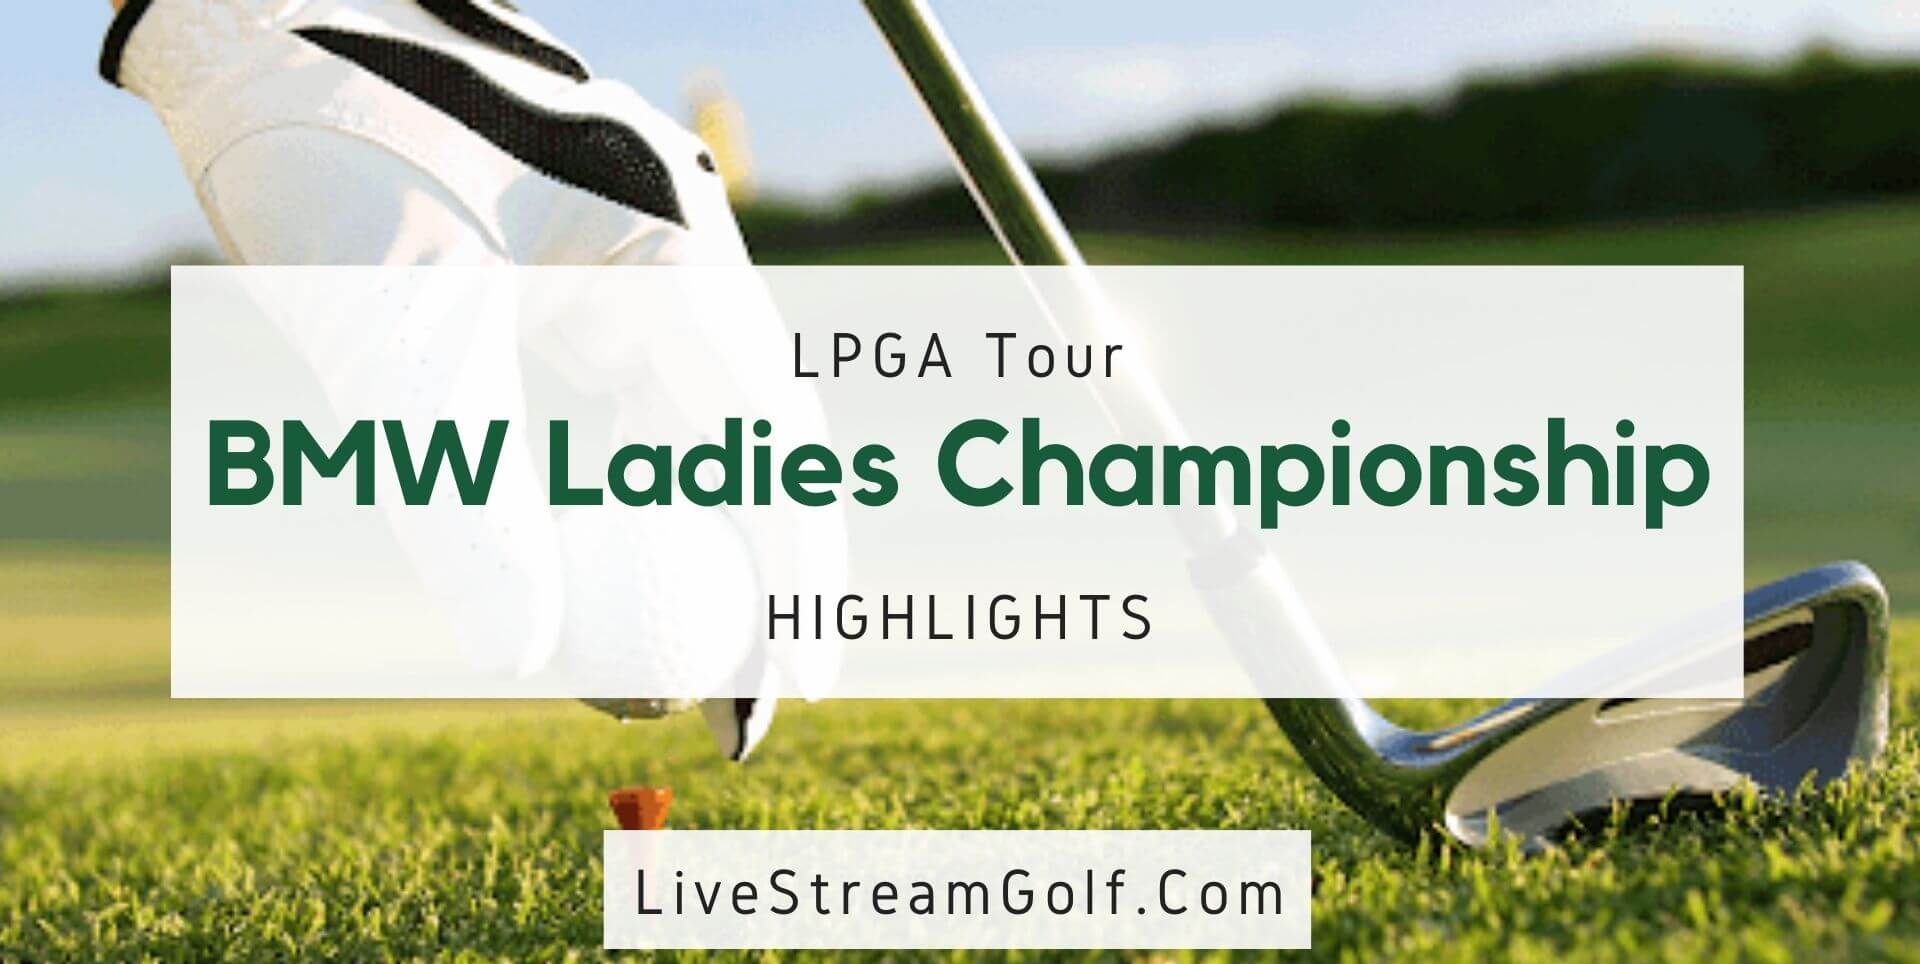 BMW Ladies Championship Rd 4 Highlights LPGA Tour 2021